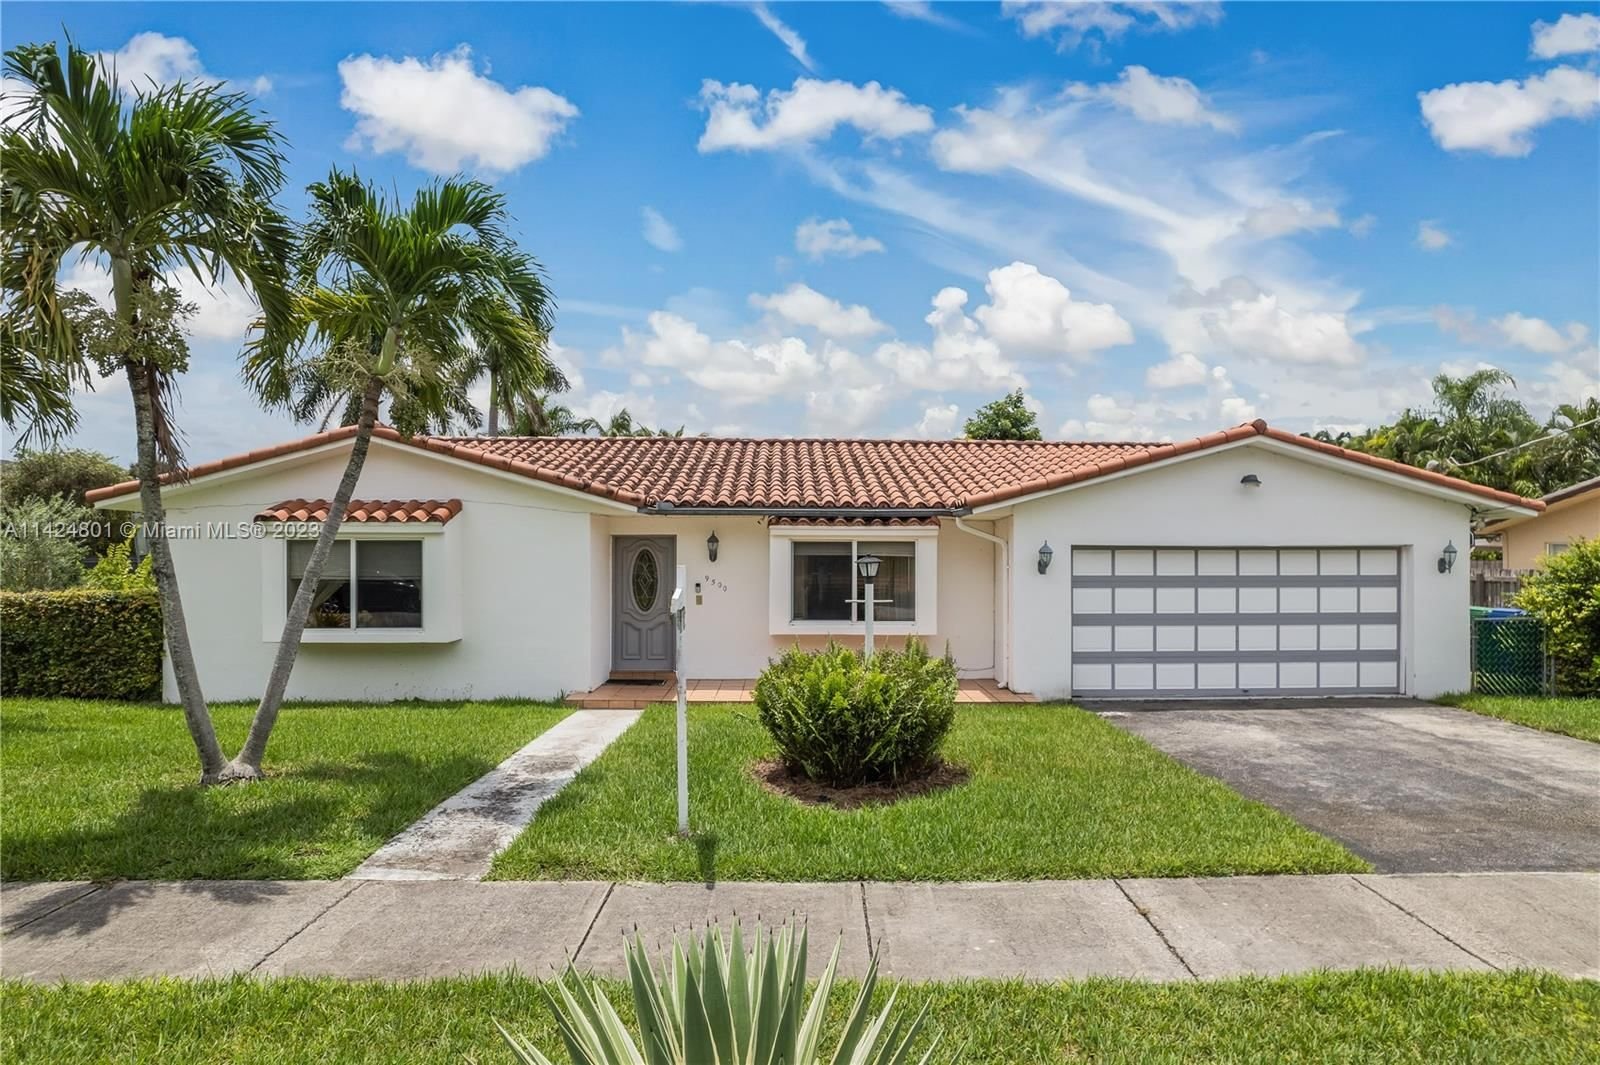 Real estate property located at 9500 64th St, Miami-Dade County, Miami, FL